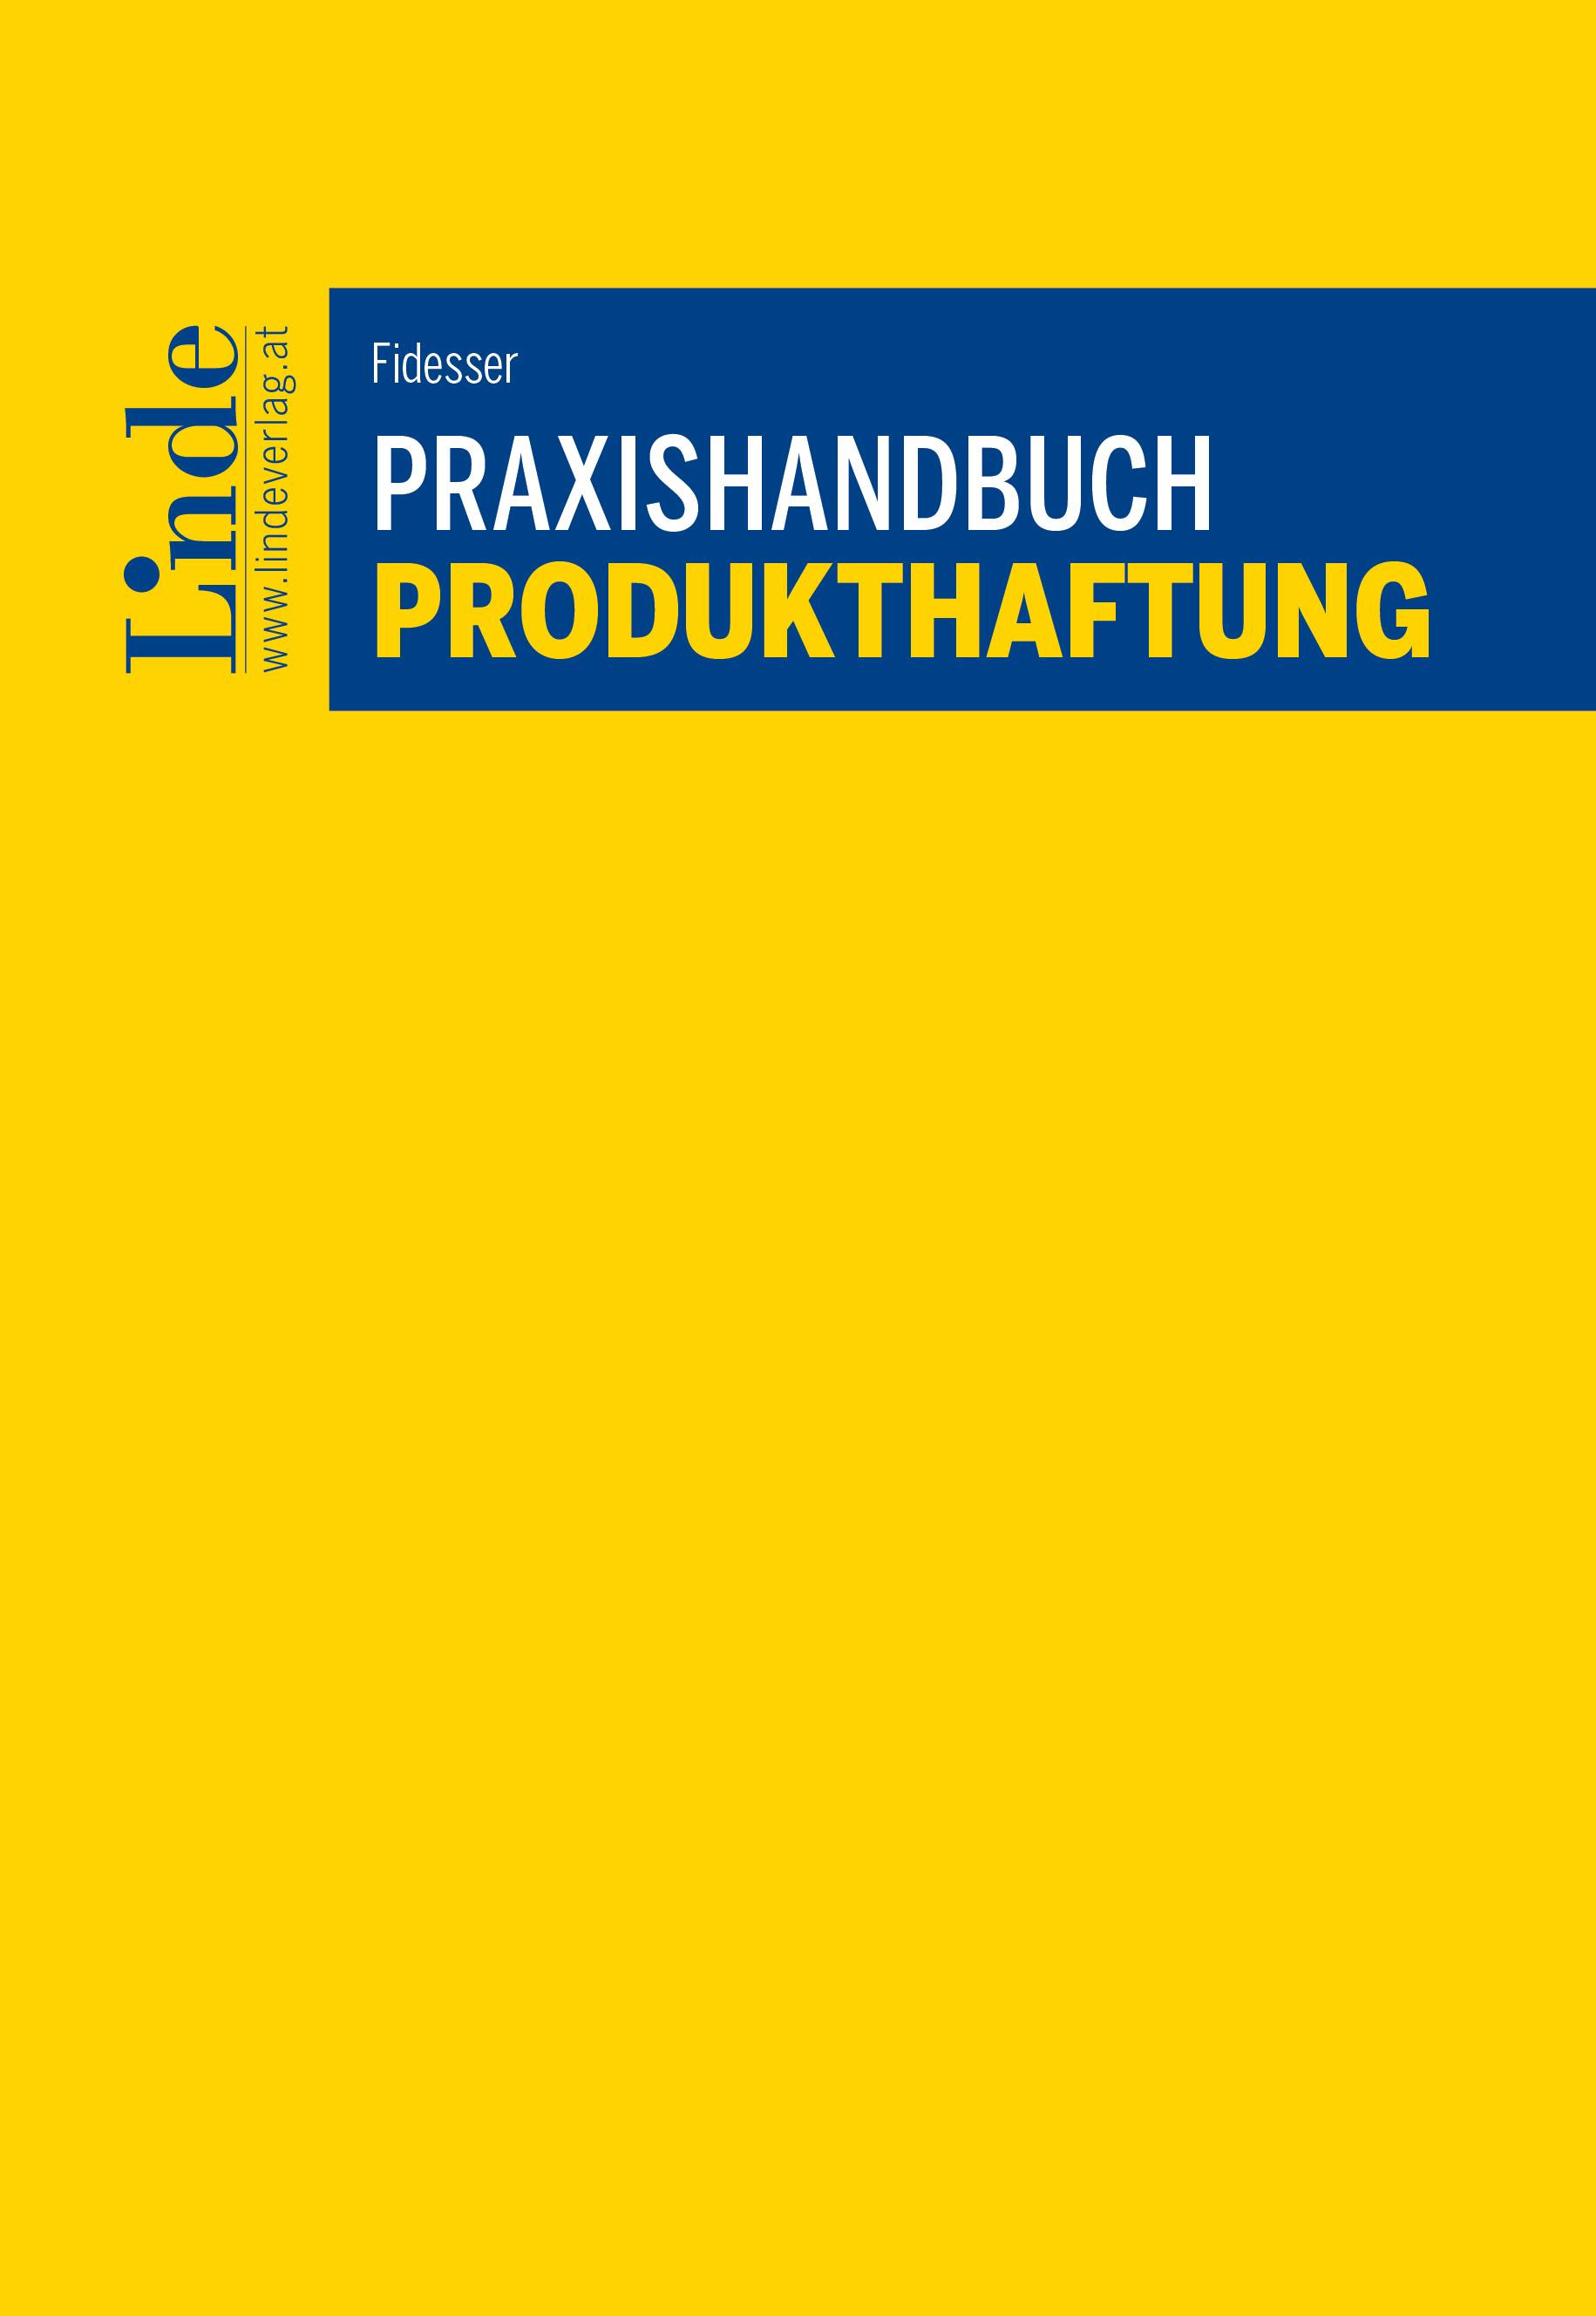 Fidesser
Praxishandbuch Produkthaftung